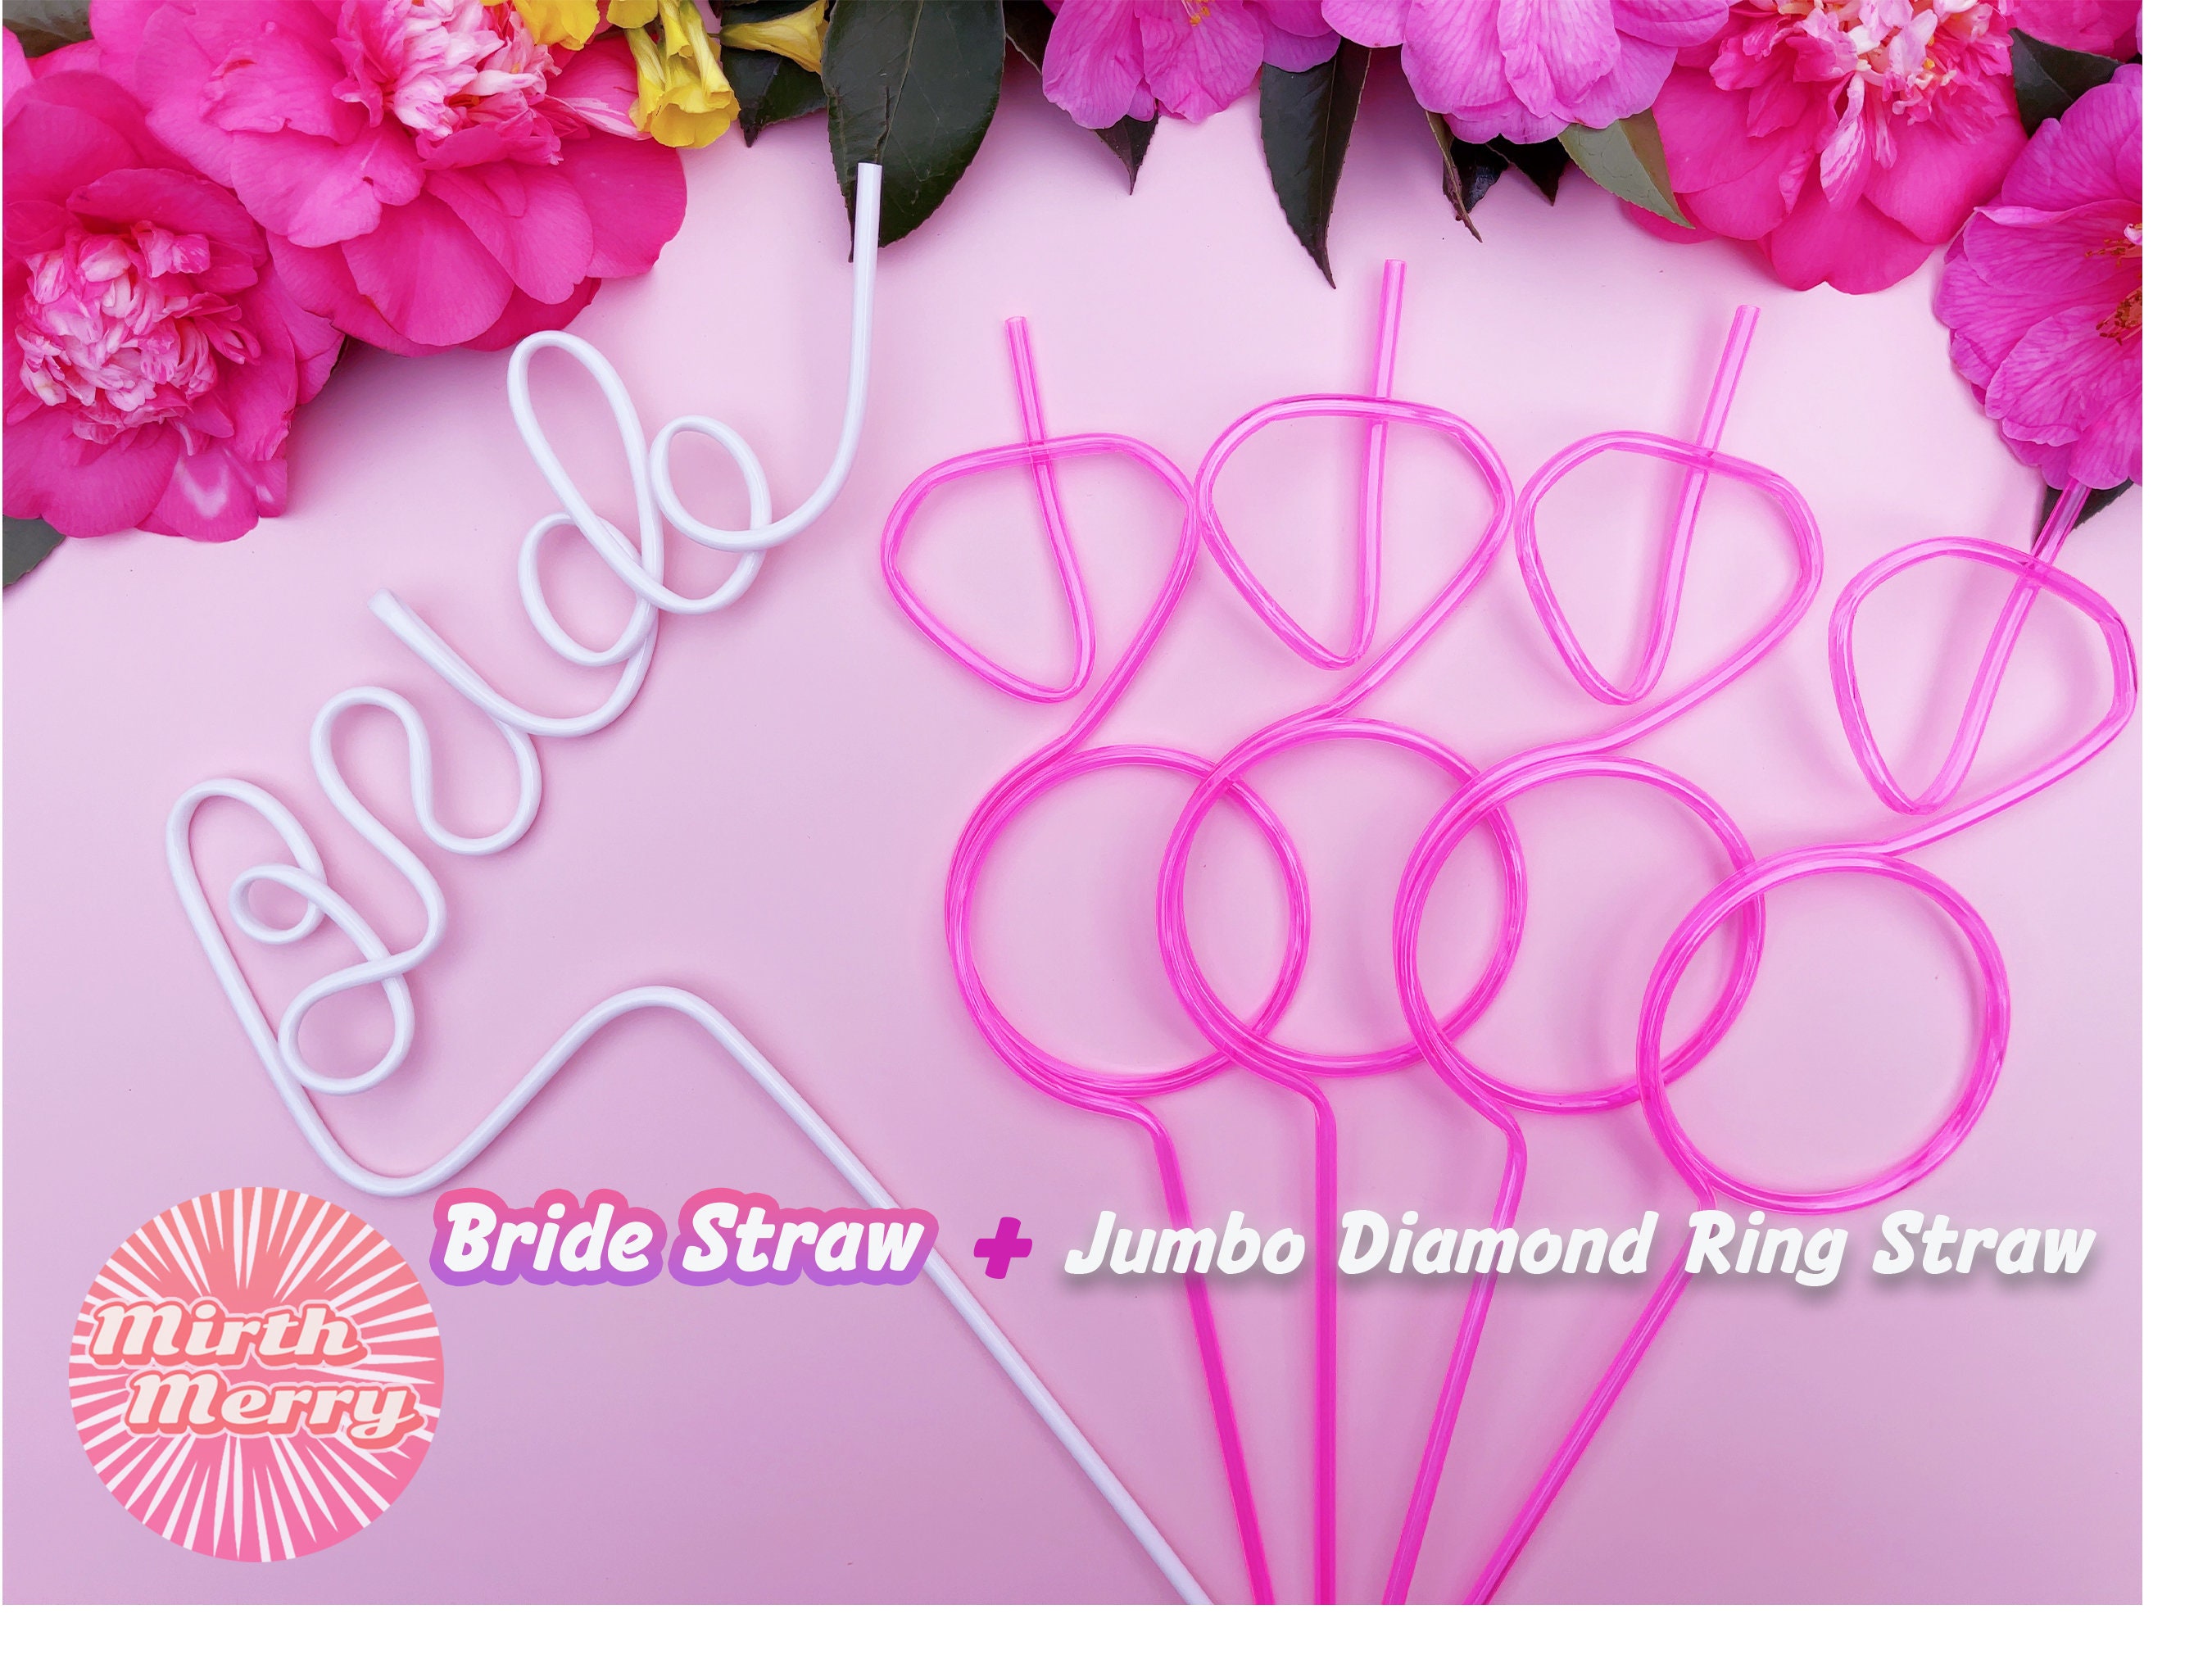 XL Bride + Babe Bachelorette Party Straws – The Native Bride